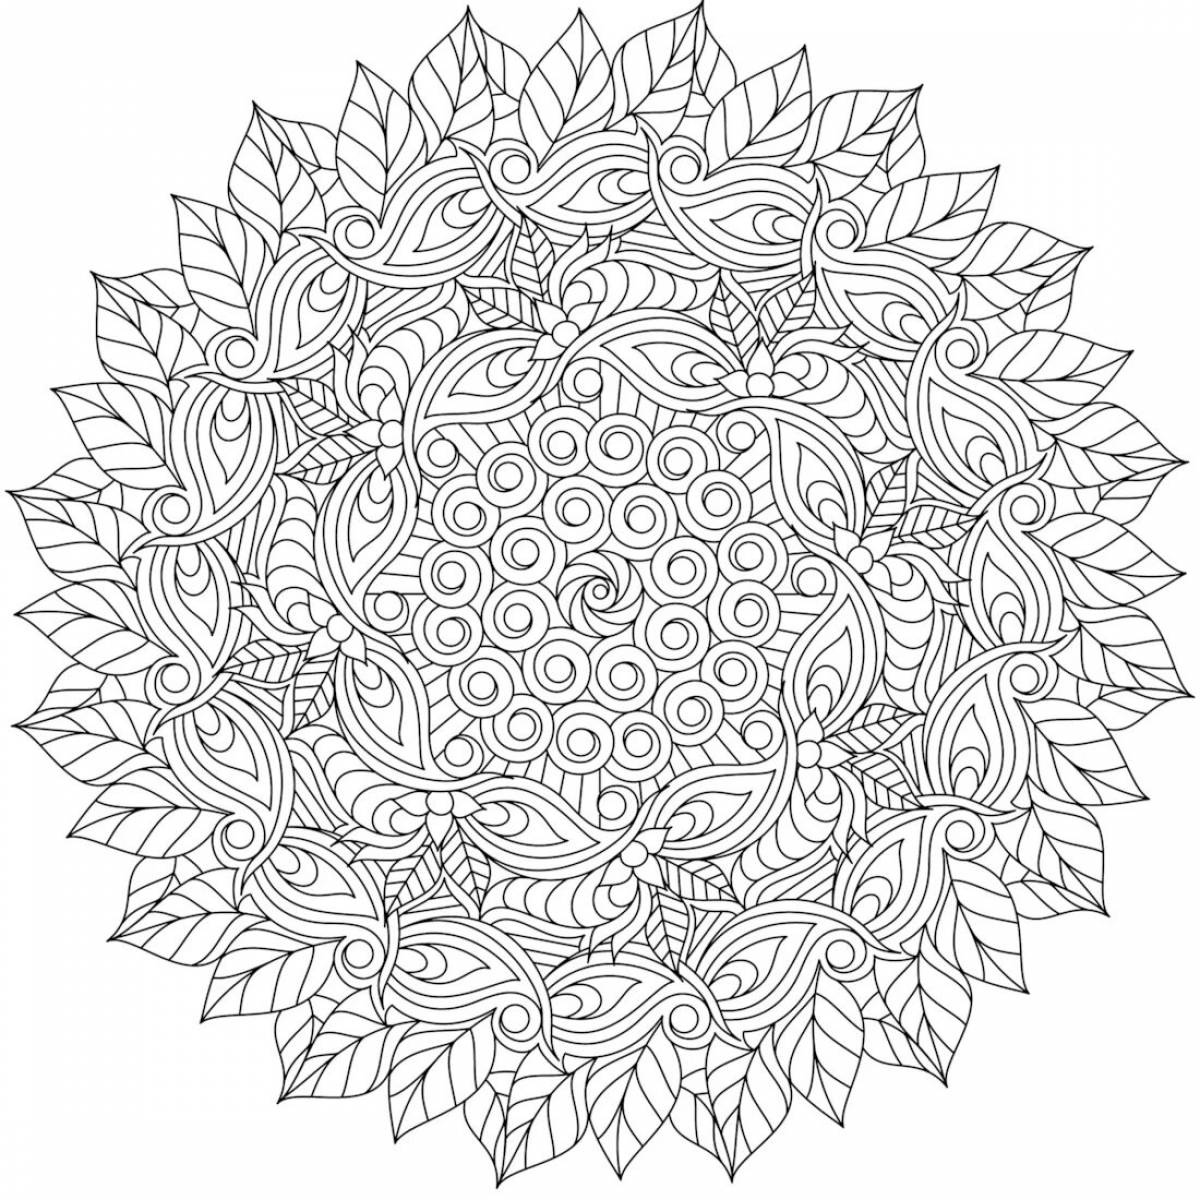 Intricate mandala coloring page - fascinating